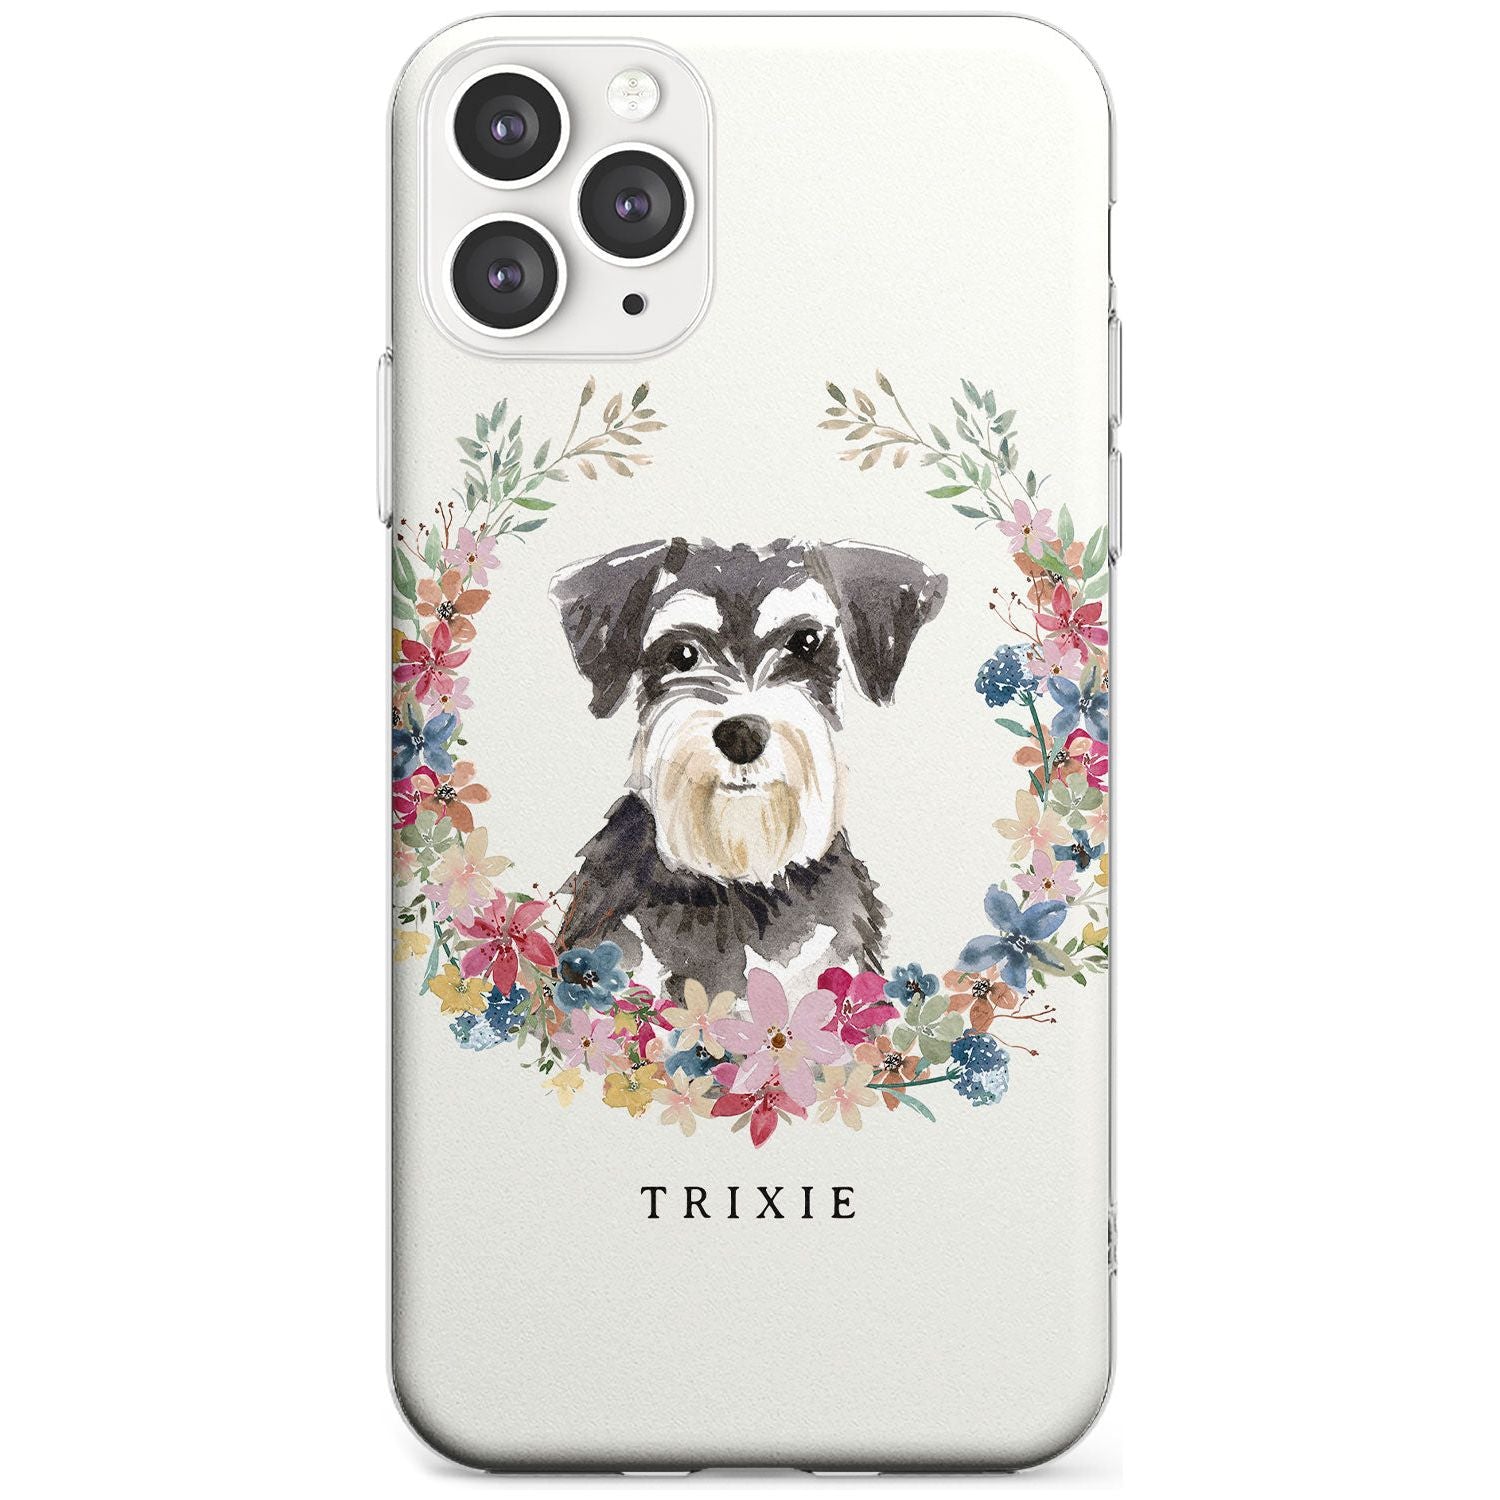 Miniature Schnauzer - Watercolour Dog Portrait Slim TPU Phone Case for iPhone 11 Pro Max